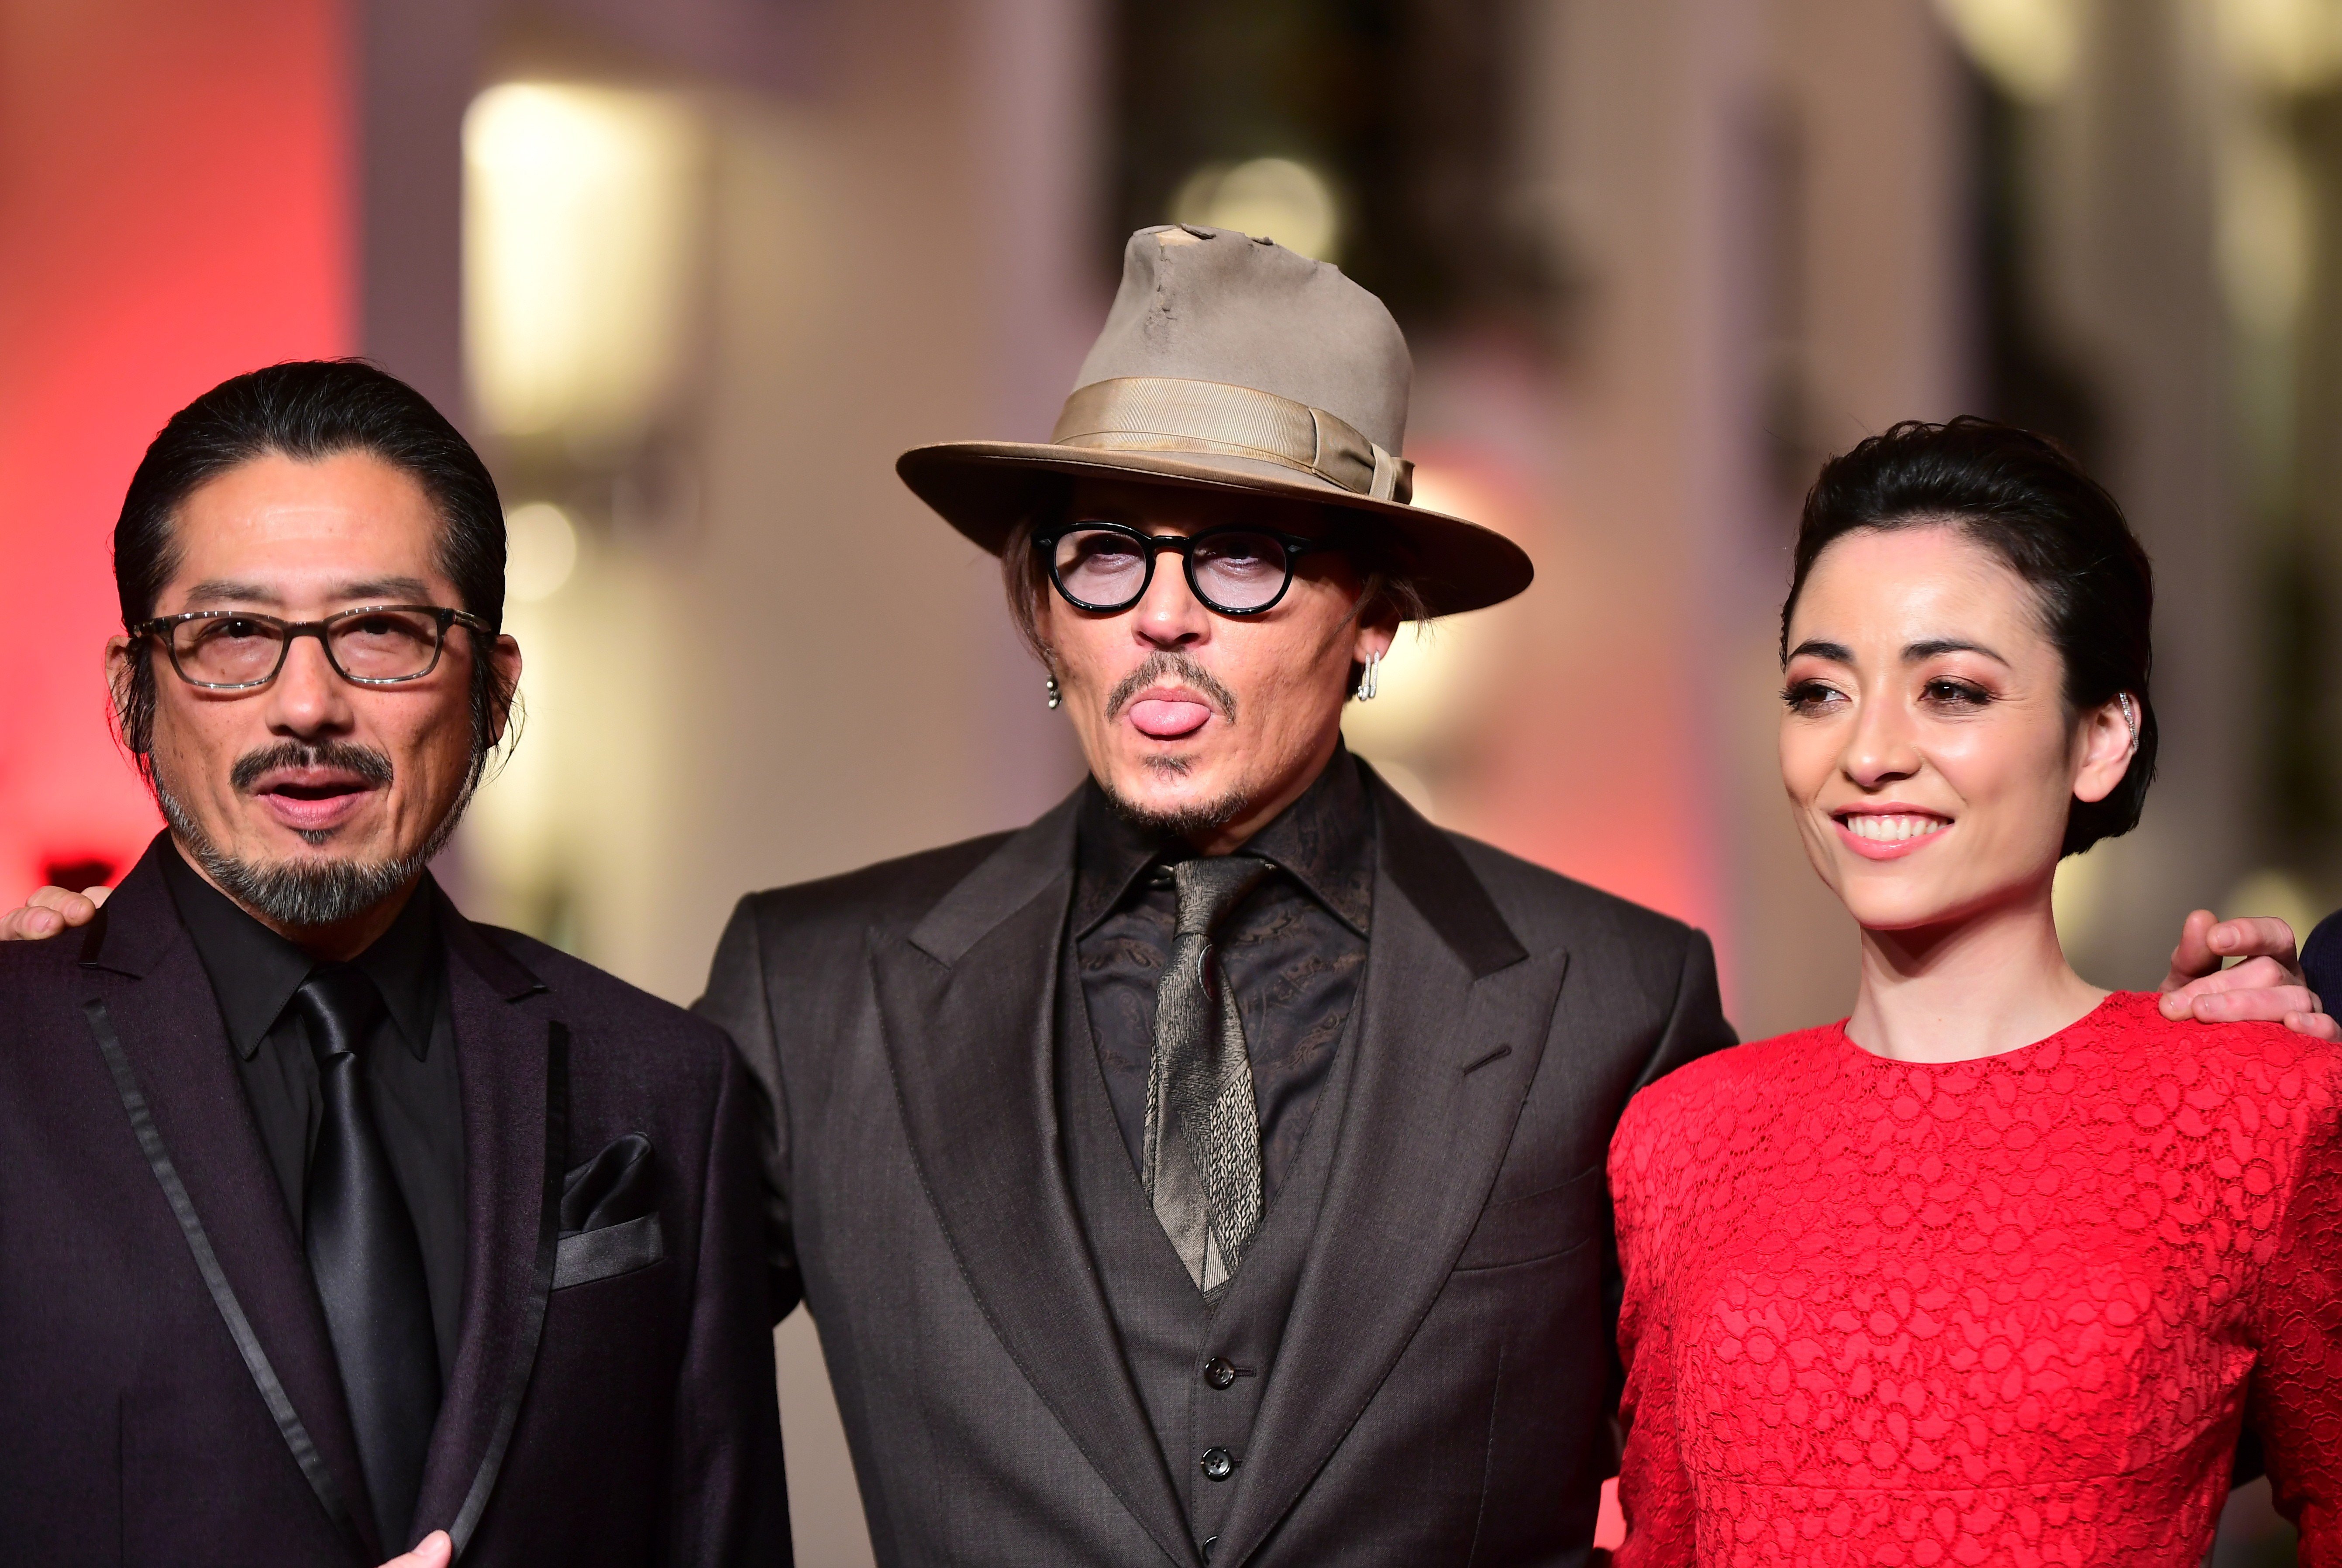 From left: Hiroyuki Sanada, Johnny Depp, and Minami. Photo: EPA-EFE/Clemens Bilan